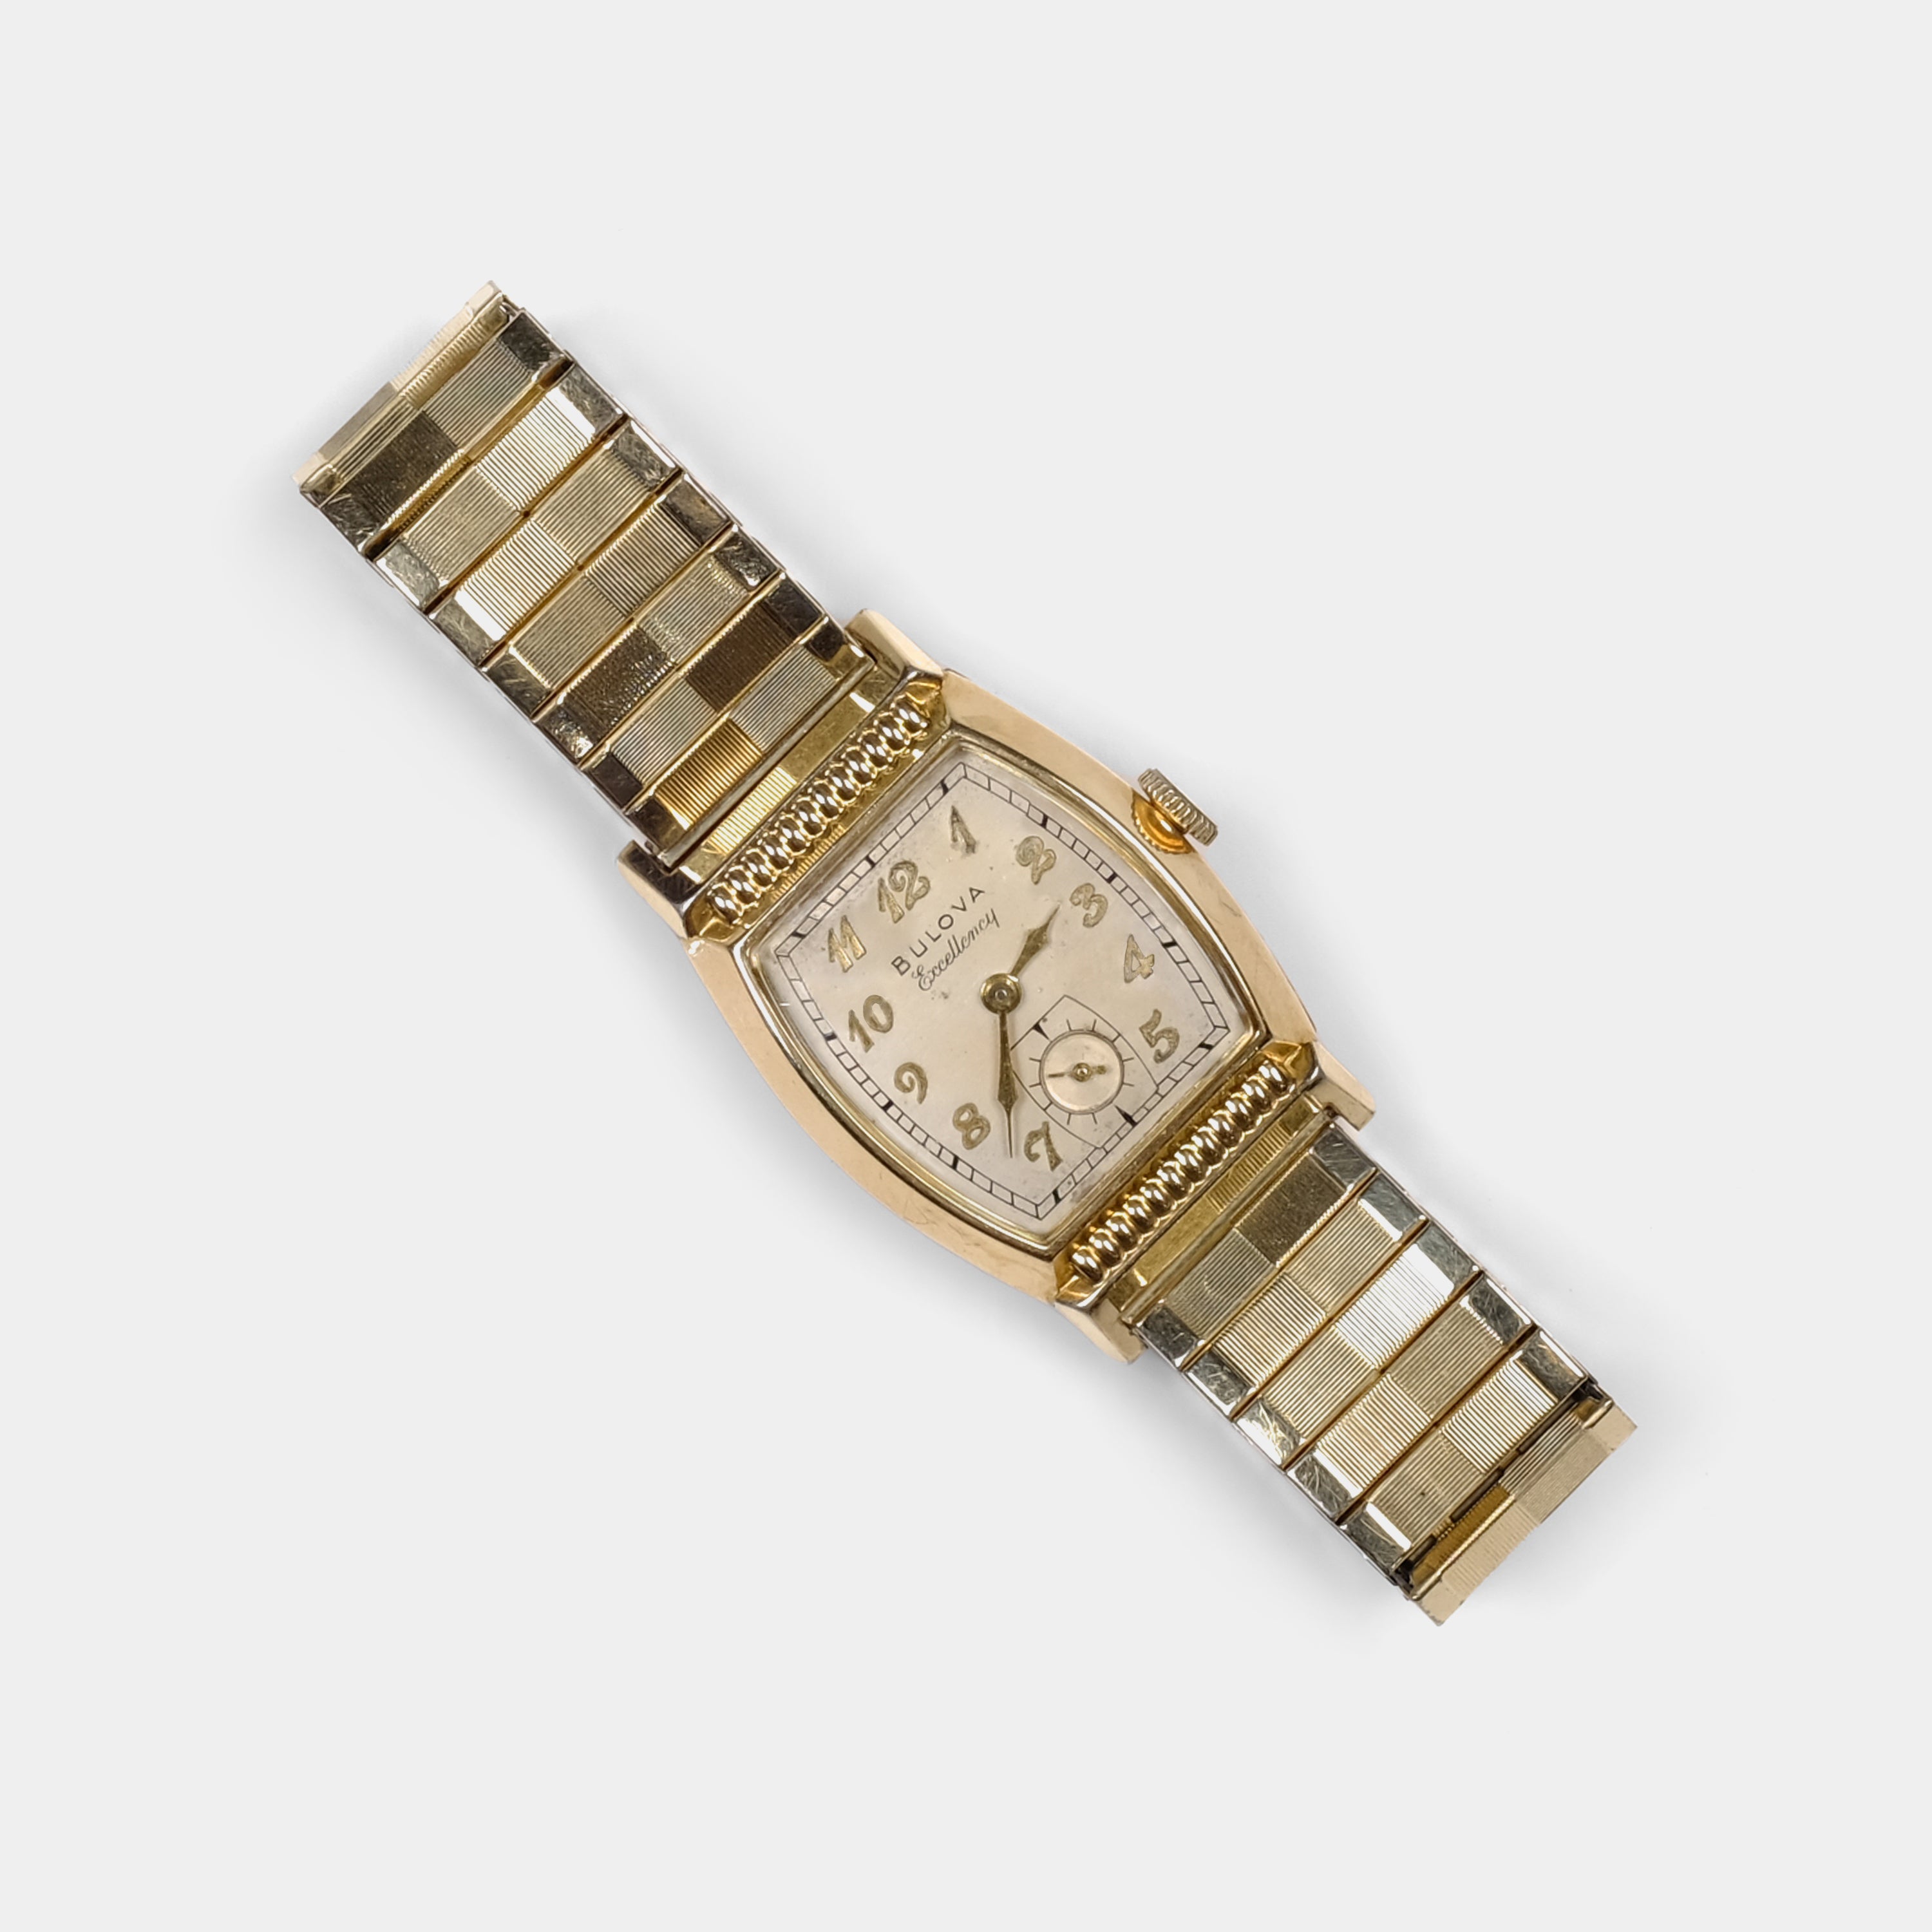 Bulova His Excellency "CC" A9 Date Code 1949 Wristwatch